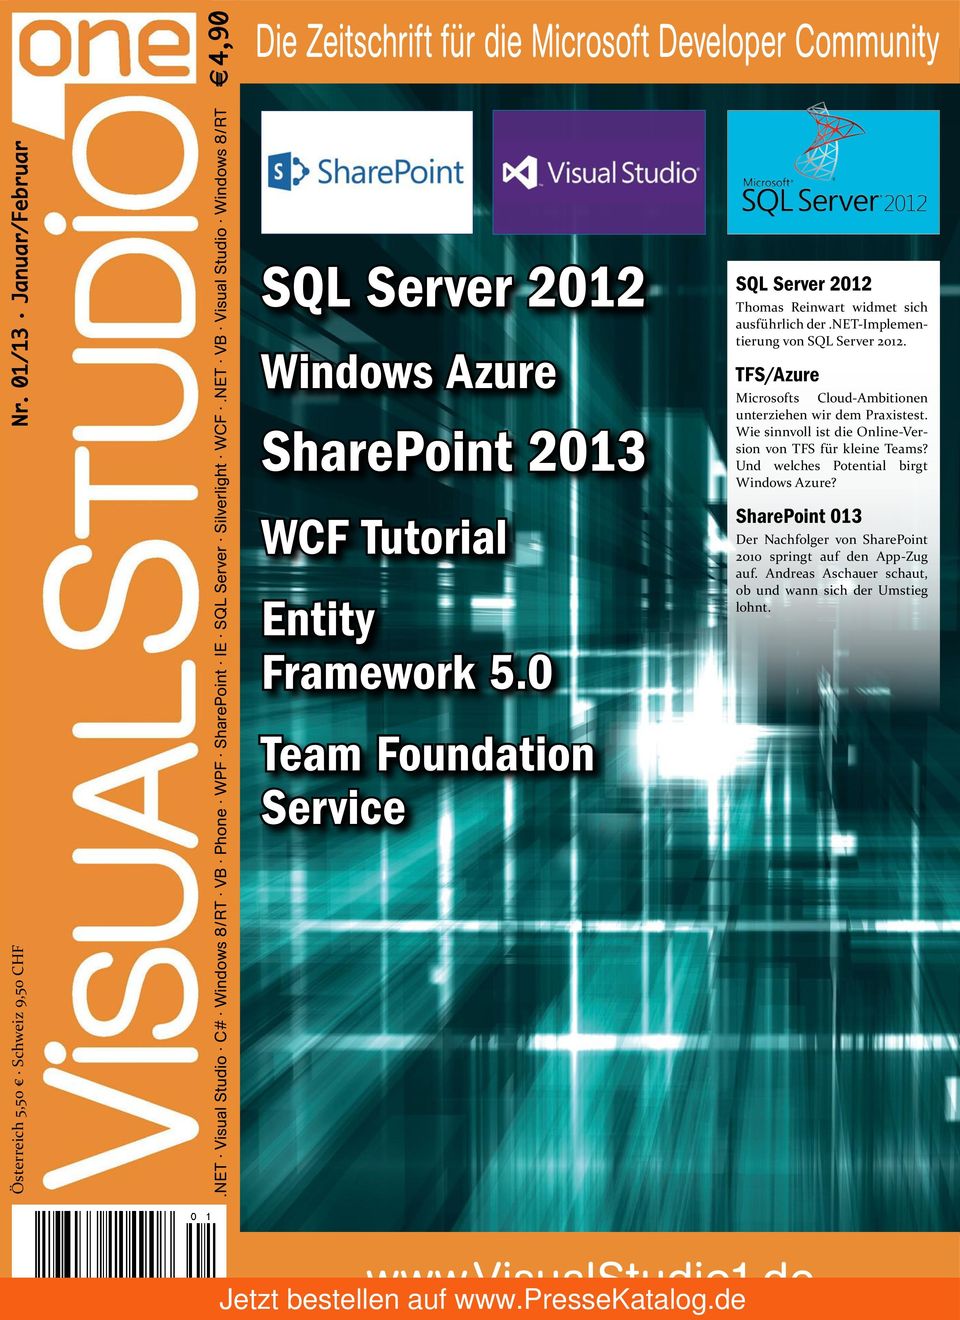 NET VB Visual Studio Windows 8/RT SQL Server 2012 Windows Azure SharePoint 2013 WCF Tutorial Entity Framework 5.